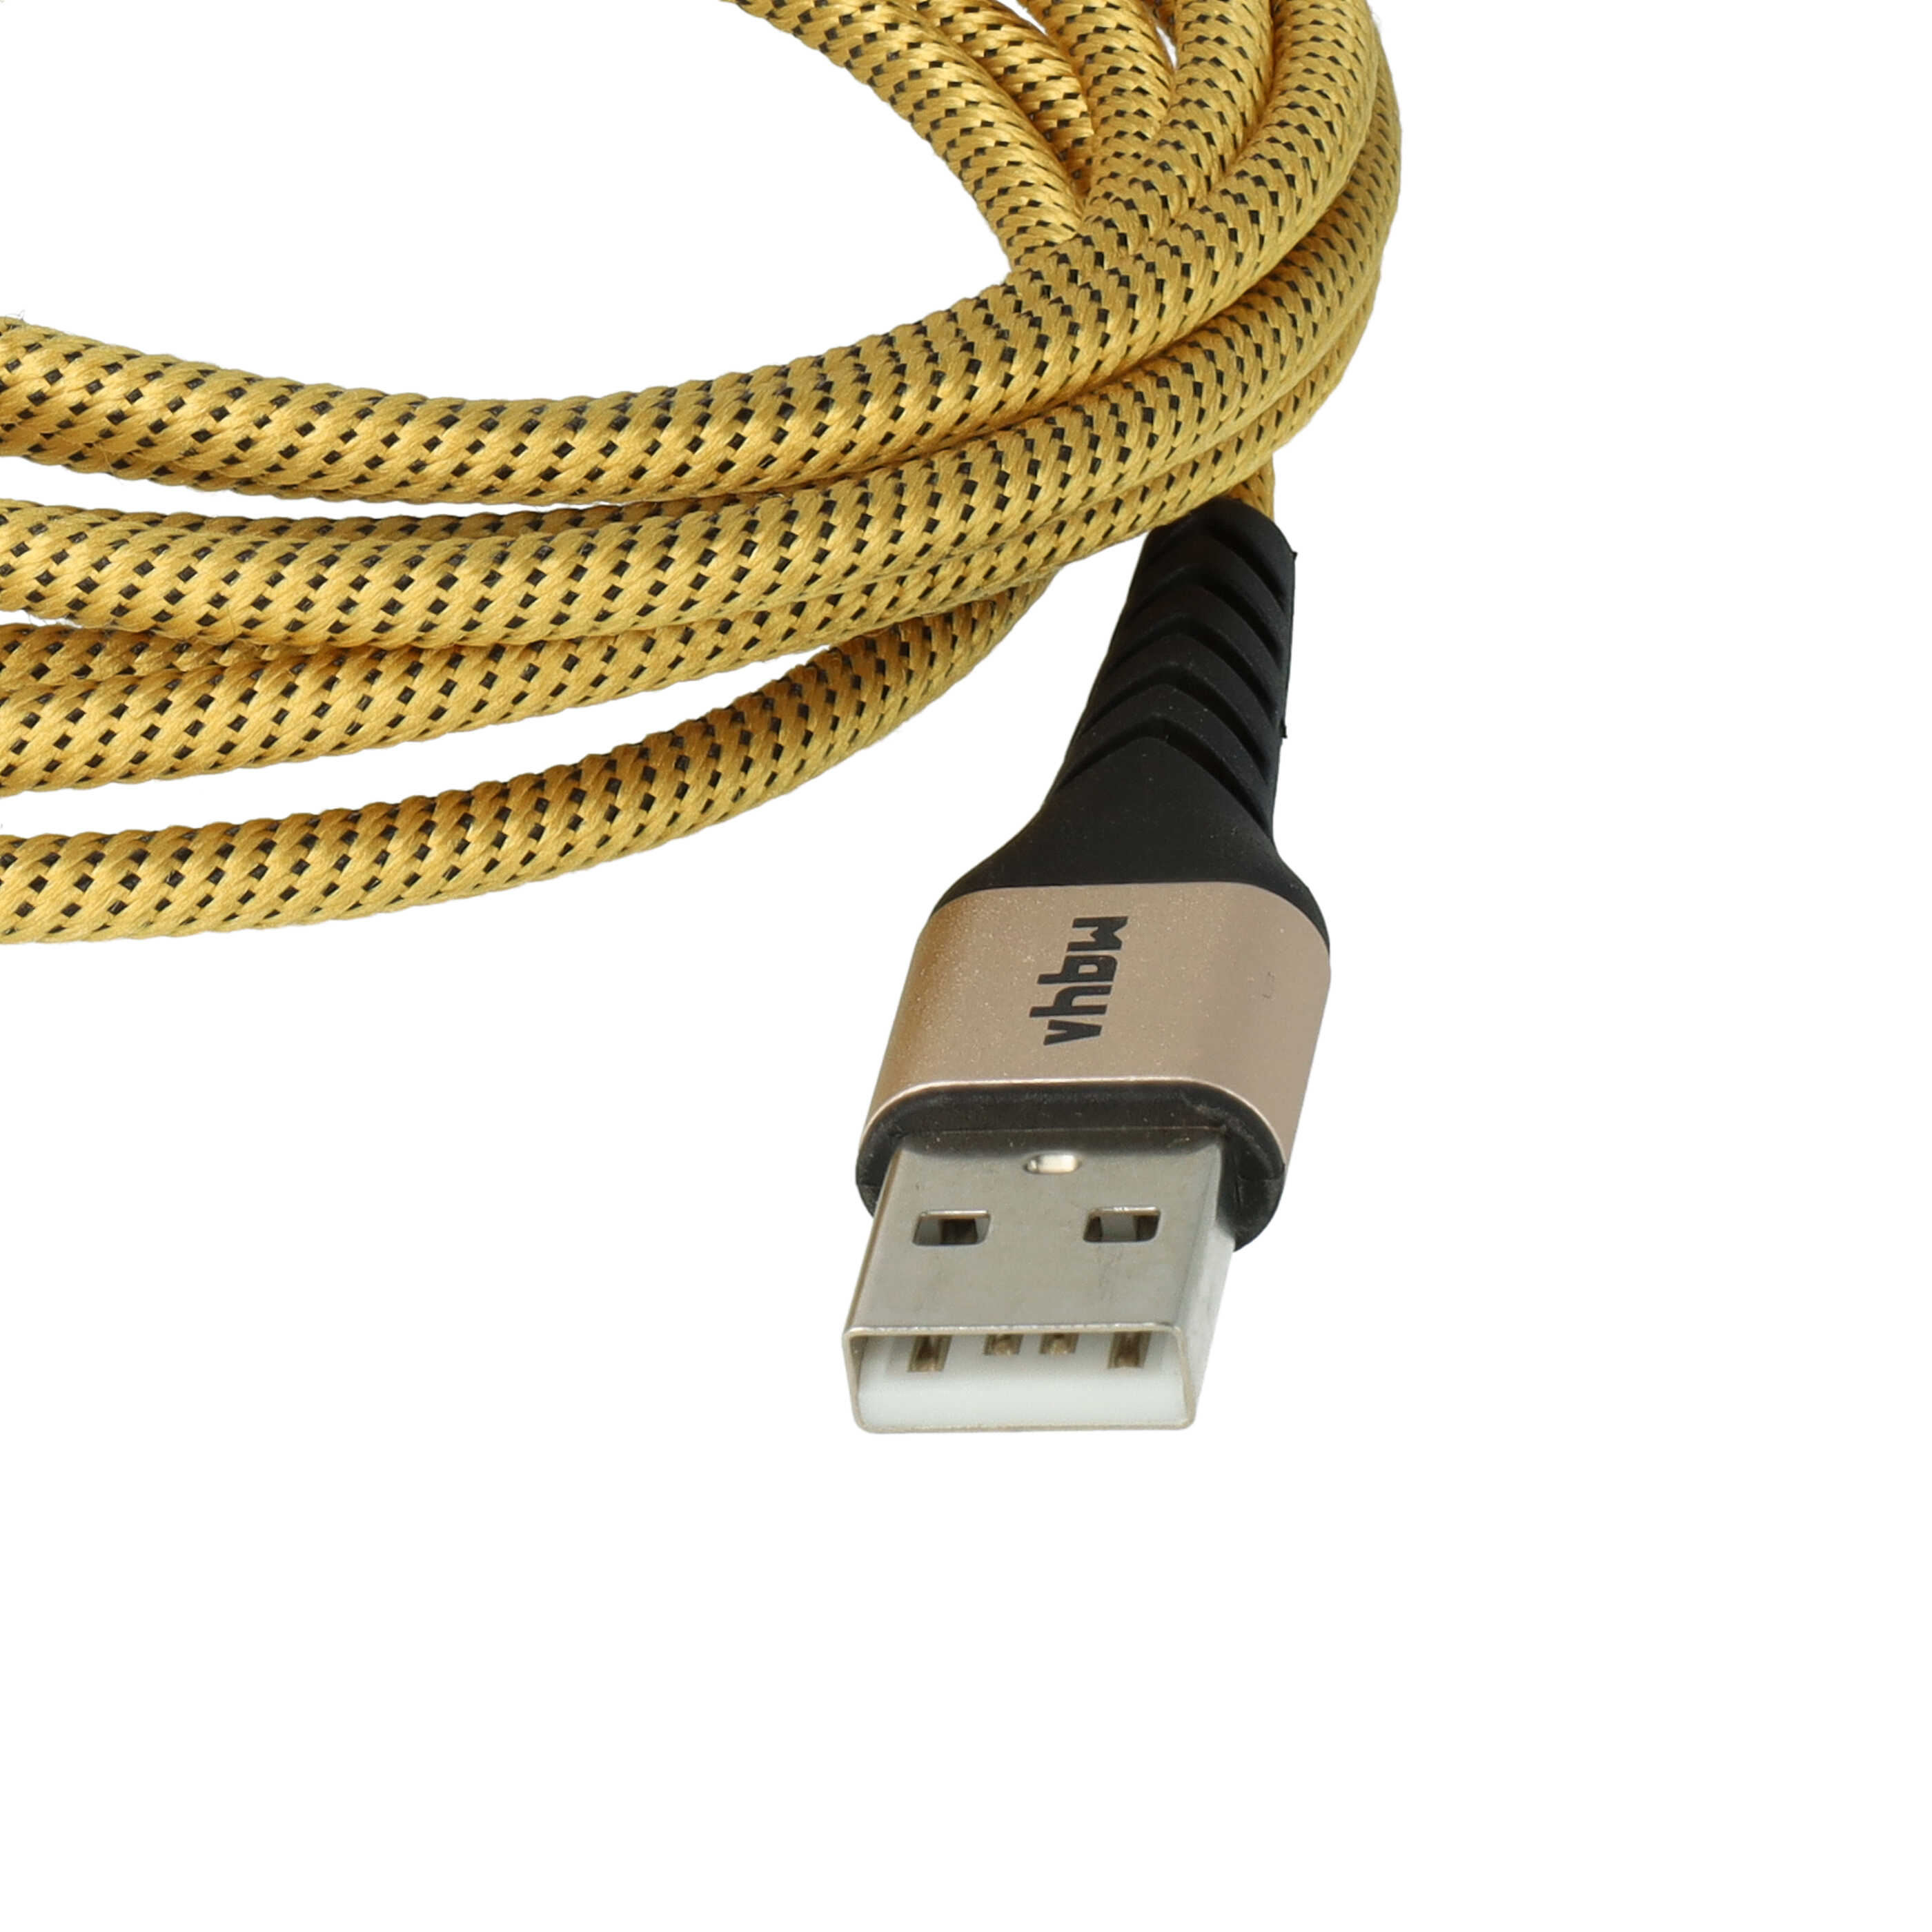 Câble Lightning vers USB A pour iOS Apple AirPods - noir / jaune, 180cm